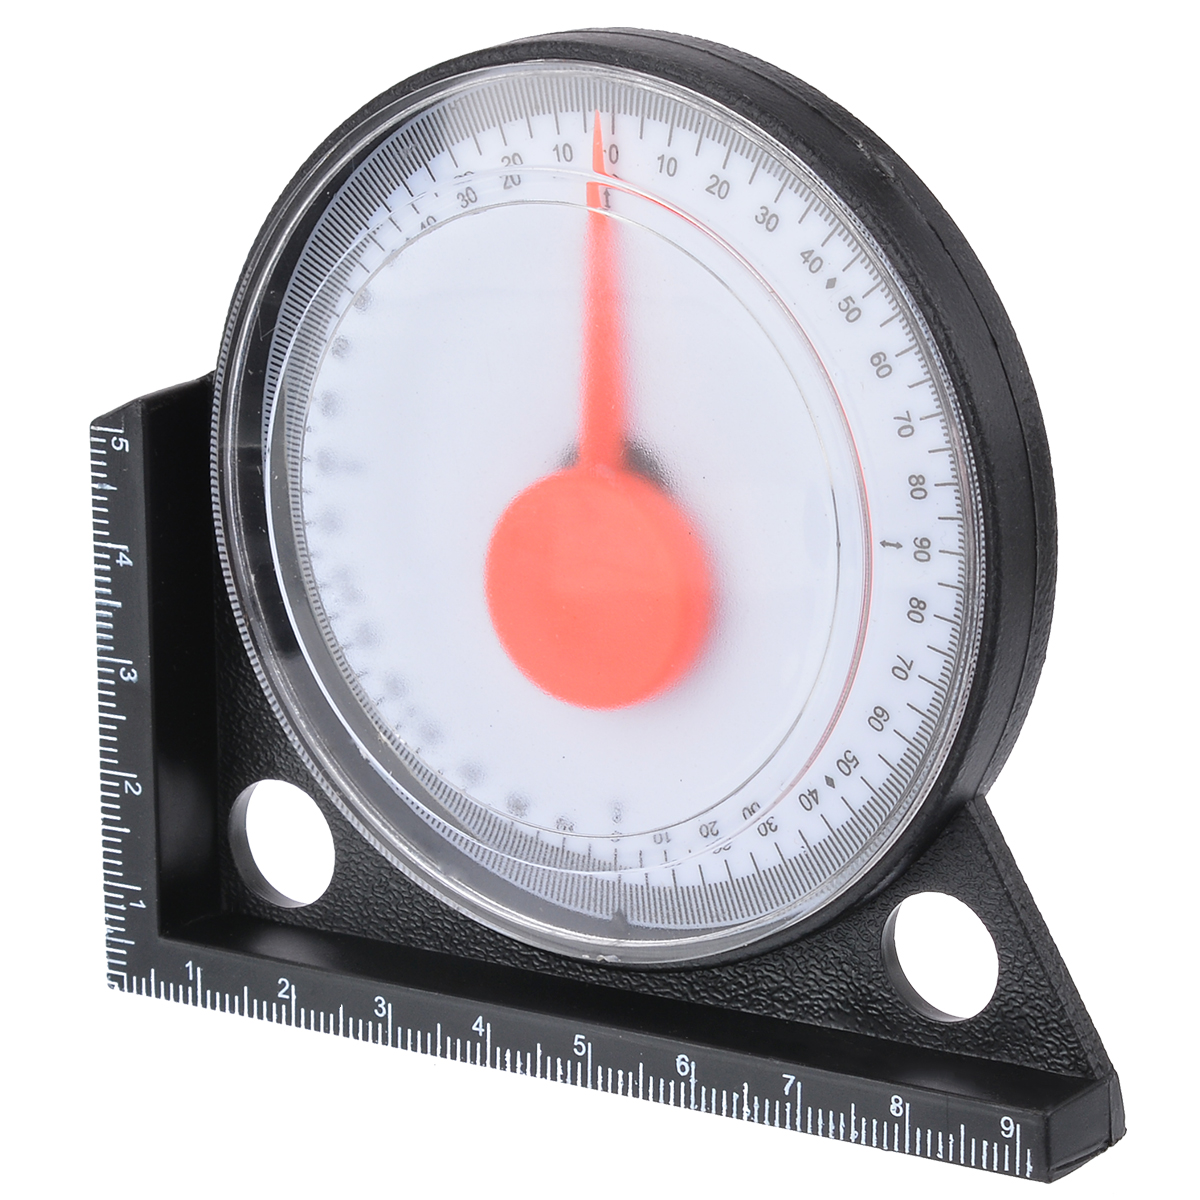 Multifunctional Inclinometer Protractor Tilt Level Meter Angle Finder Clinometer Slope Gauge Measurement Tool